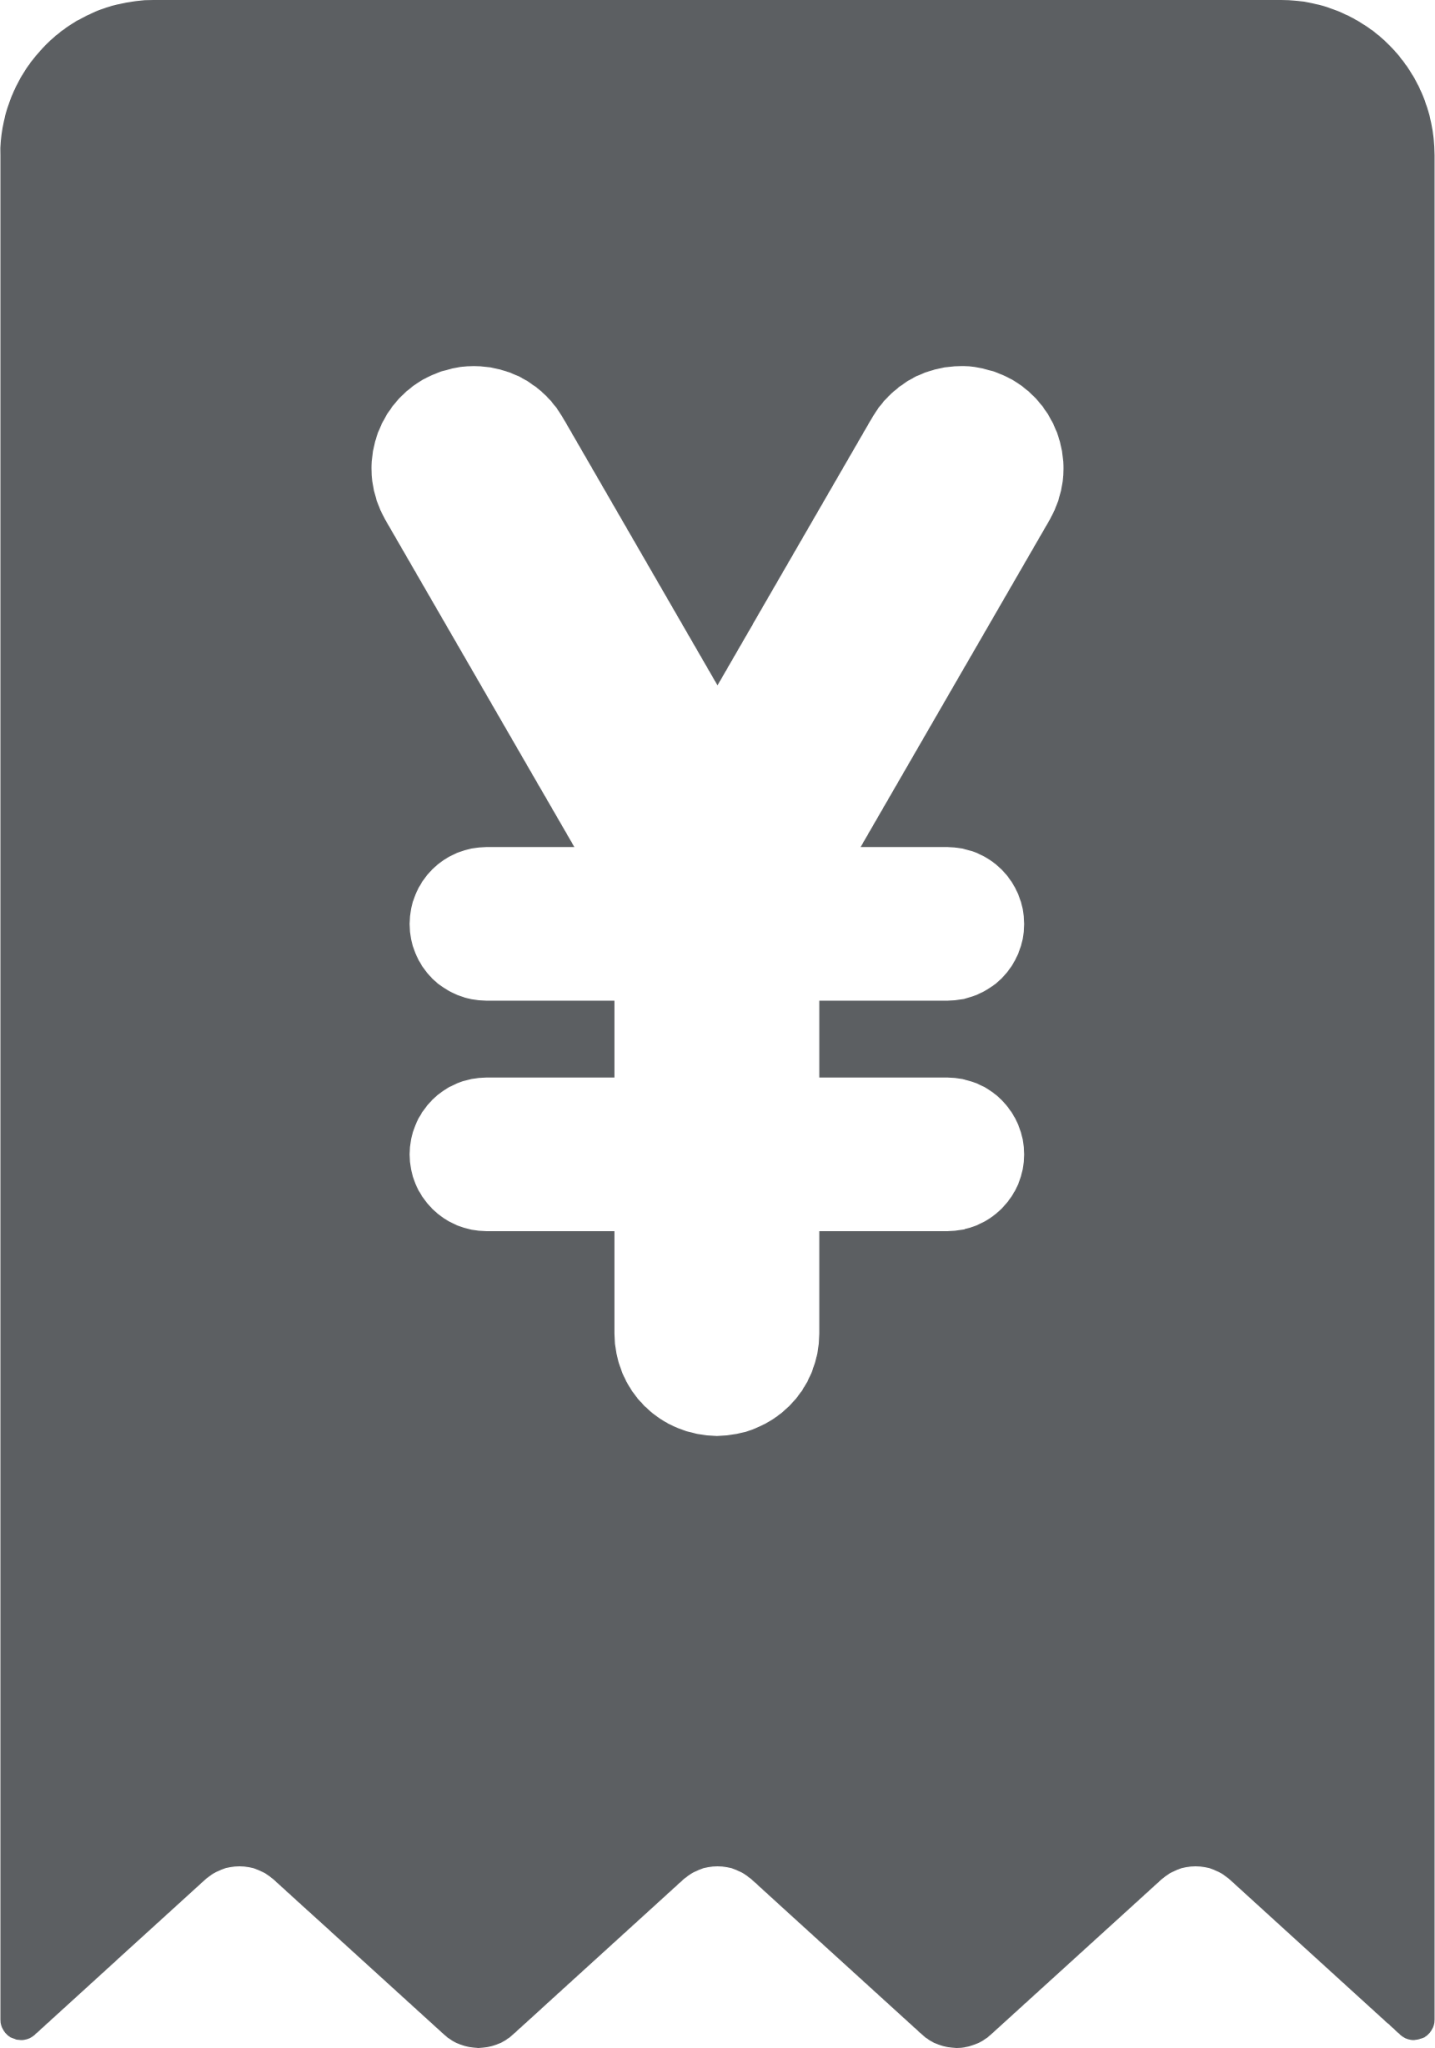 billing statement yen major icon